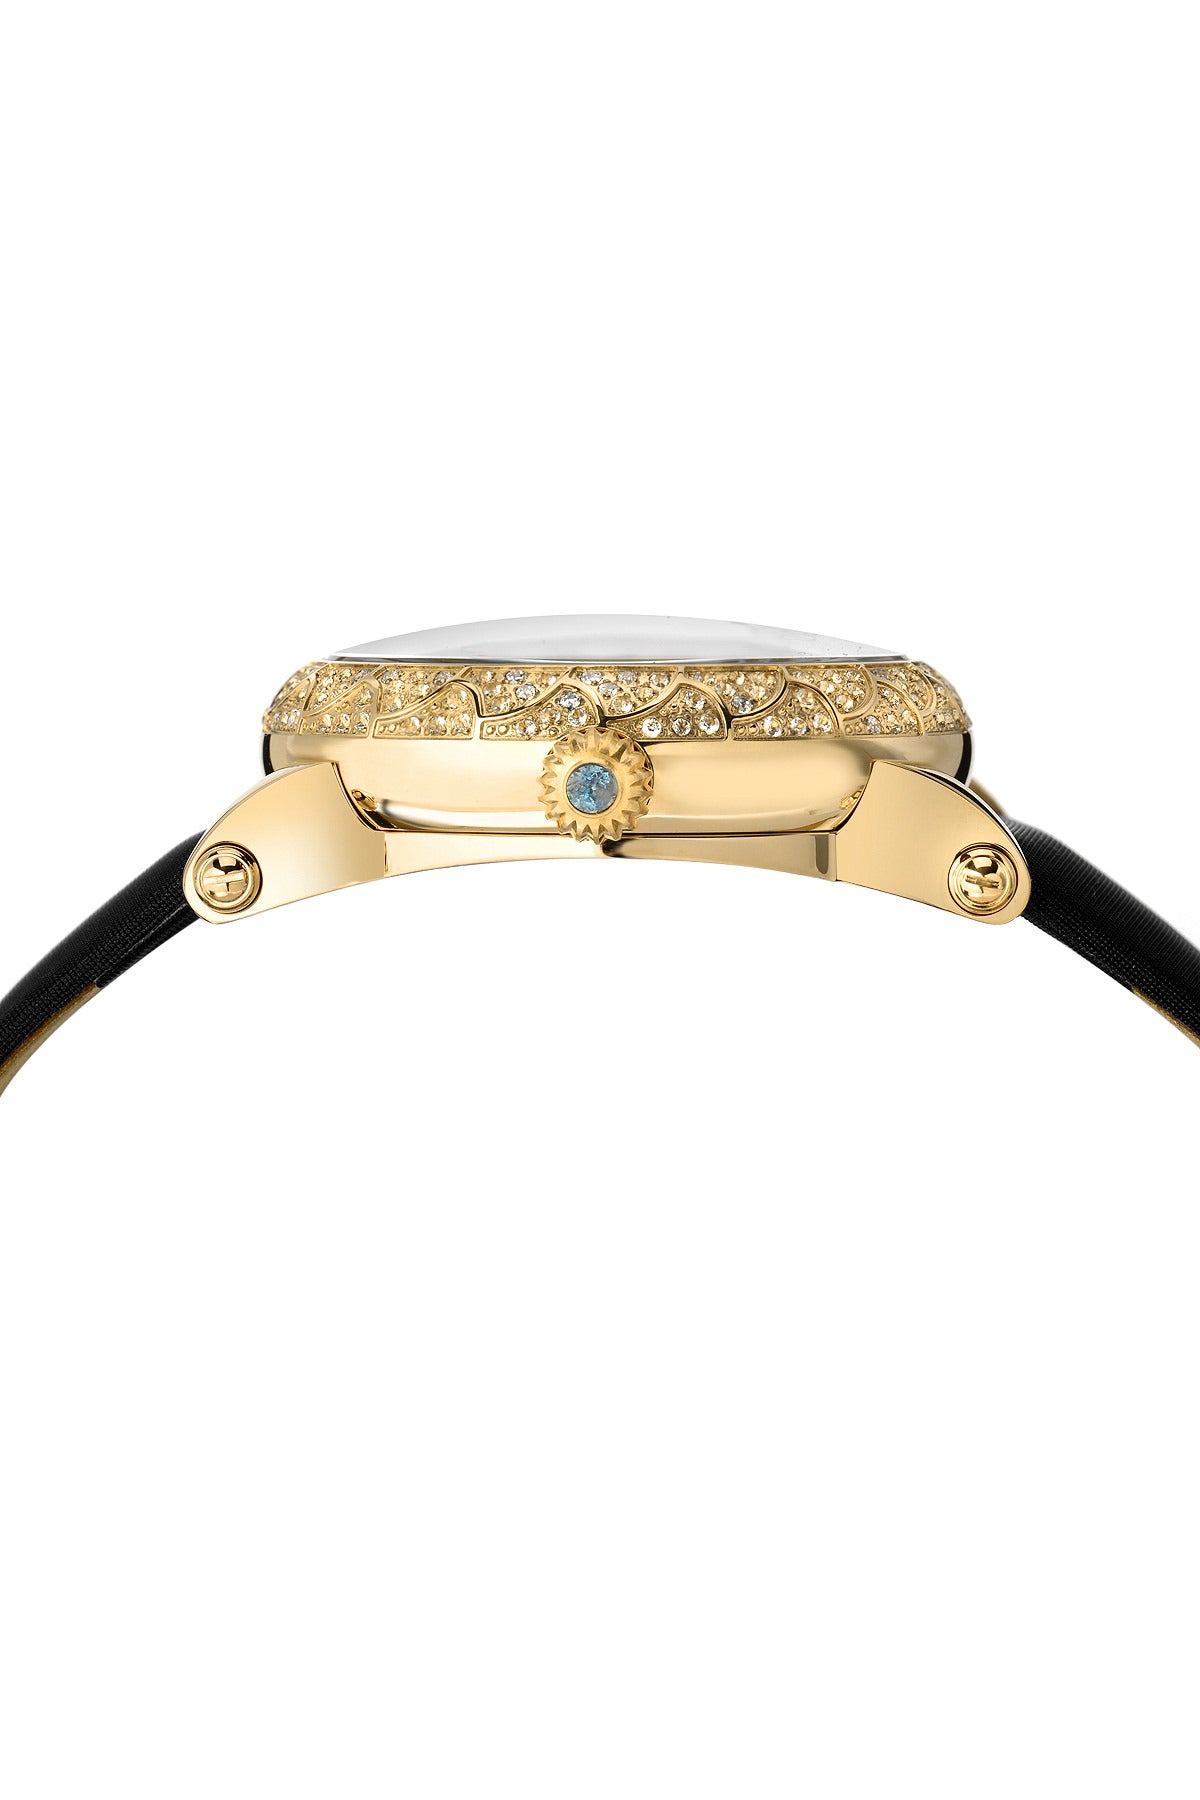 Porsamo Bleu Genevieve Luxury Topaz Women's Satin Leather Watch, Gold, Blue, Black 682BGEL